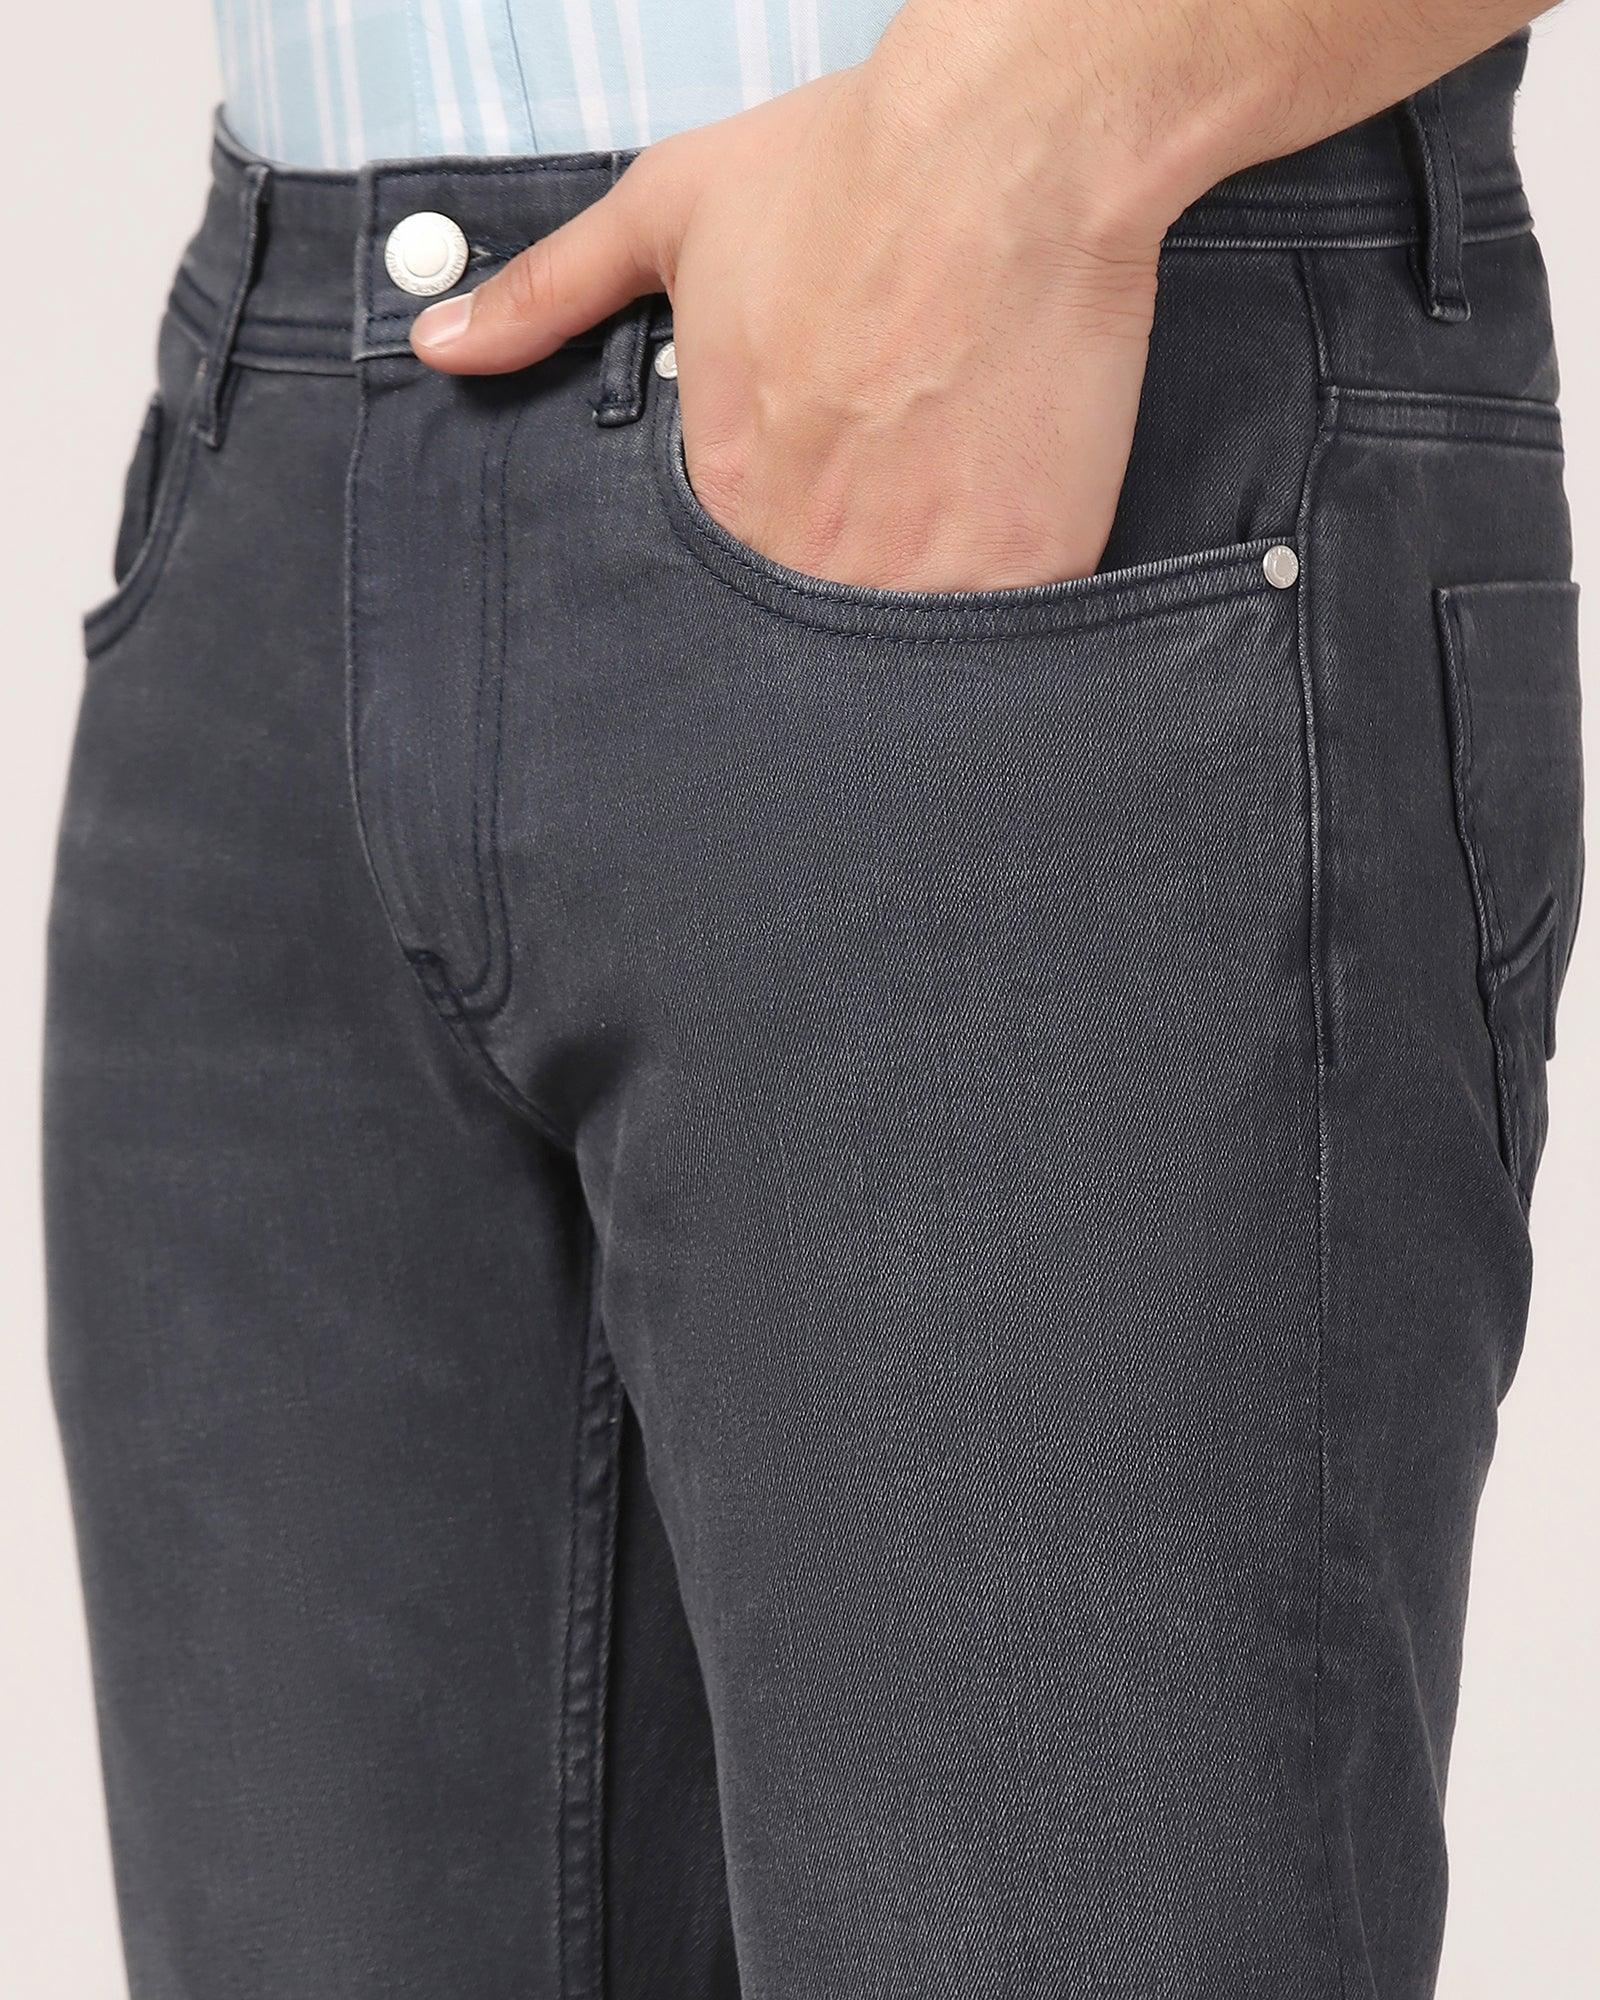 Slim Comfort Buff Fit Grey Textured Jeans - Felix